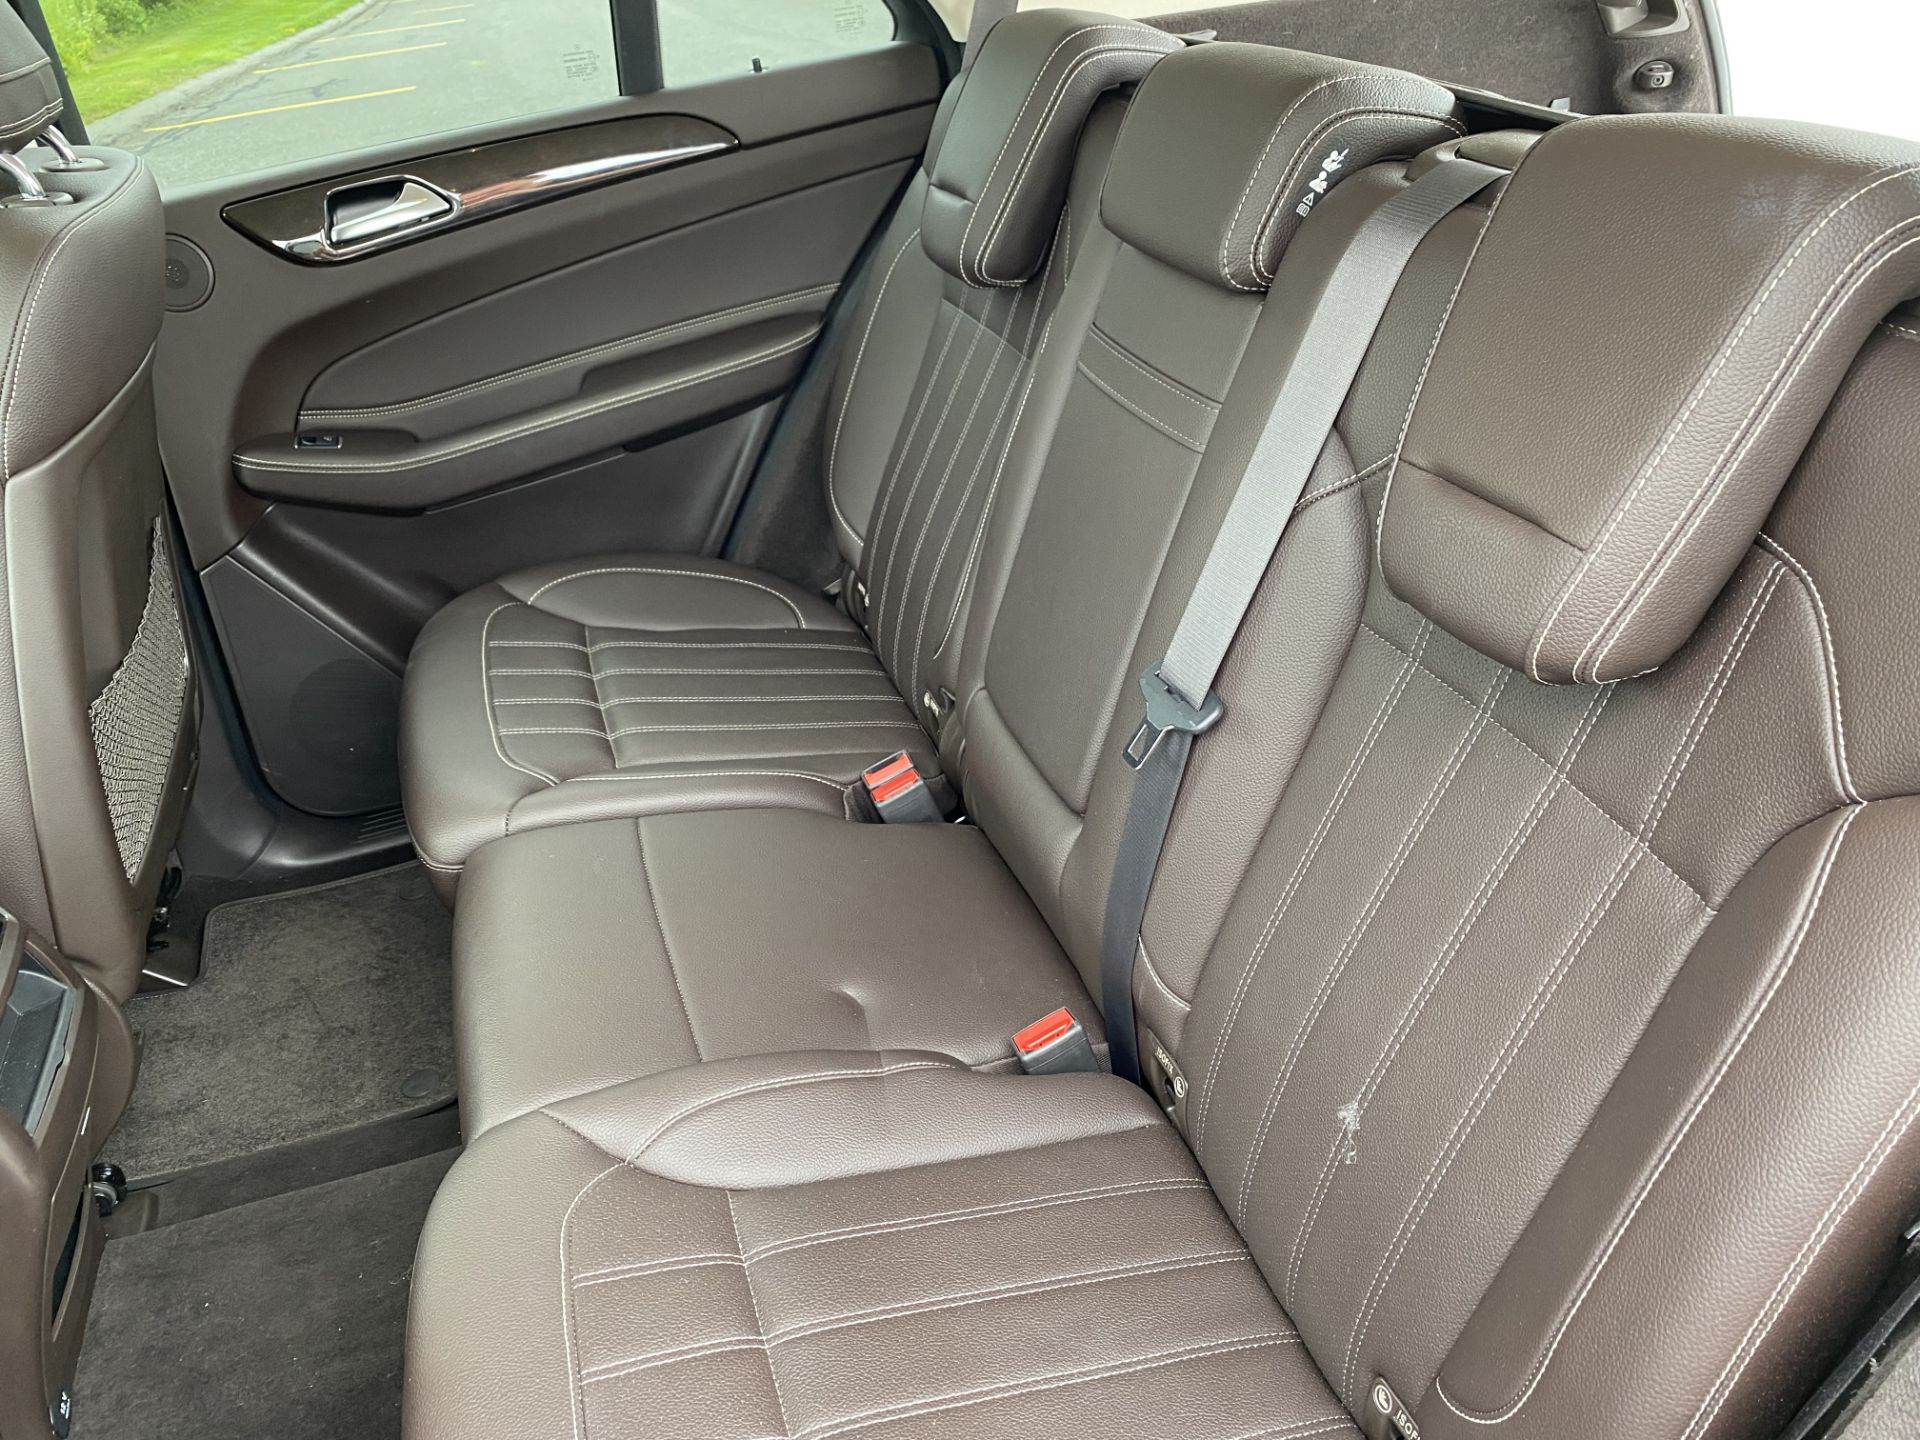 2018 Mercedes Benz GLE350, Odom: 52,420, VIN#: 4JGDA5HBXJB144786, Leather Interior, Power - Image 12 of 19